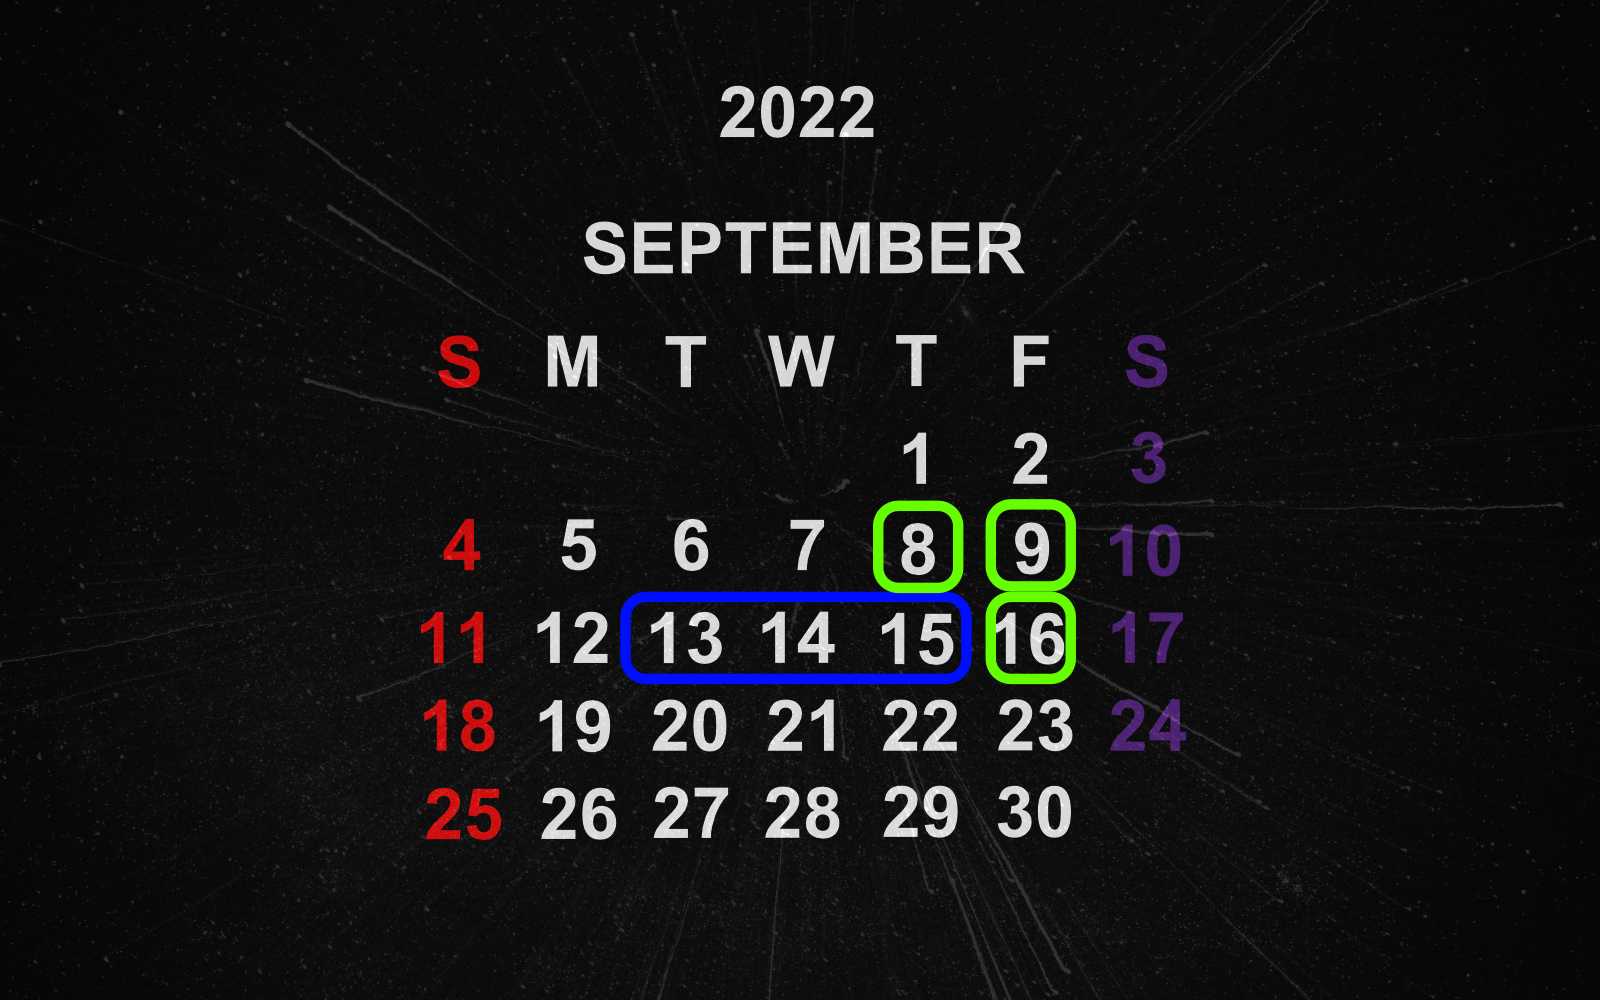 September schedule for apple